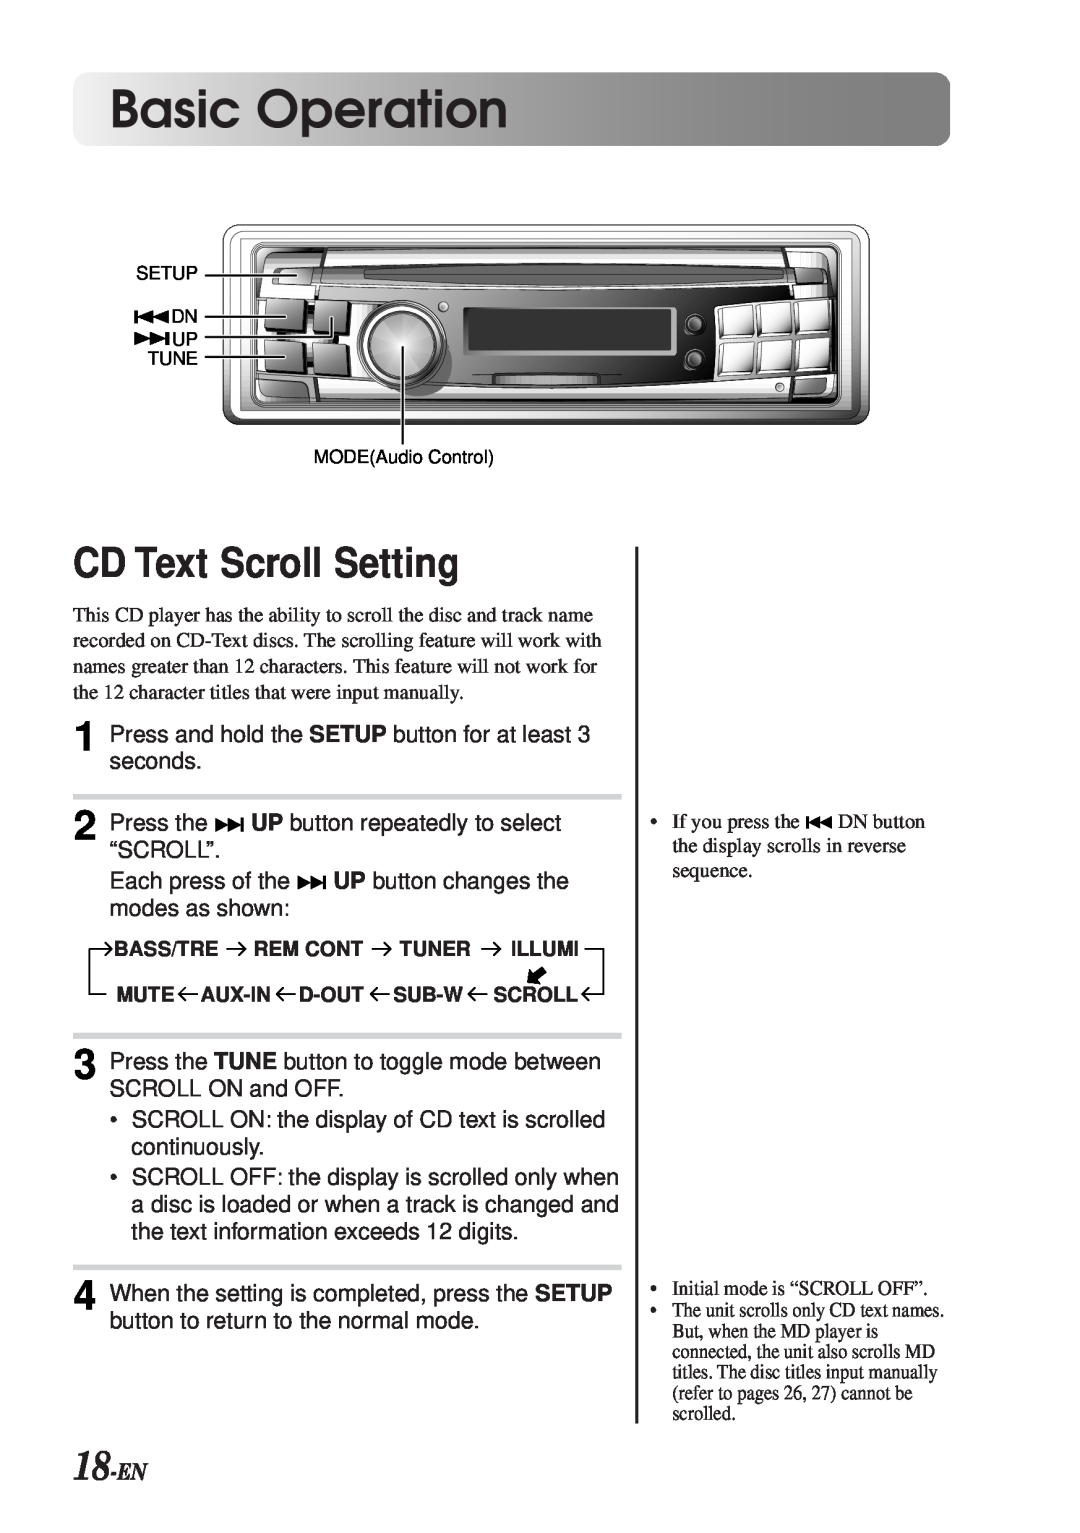 Alpine CDA-7990 manual CD Text Scroll Setting, 18-EN, Basic Operation 